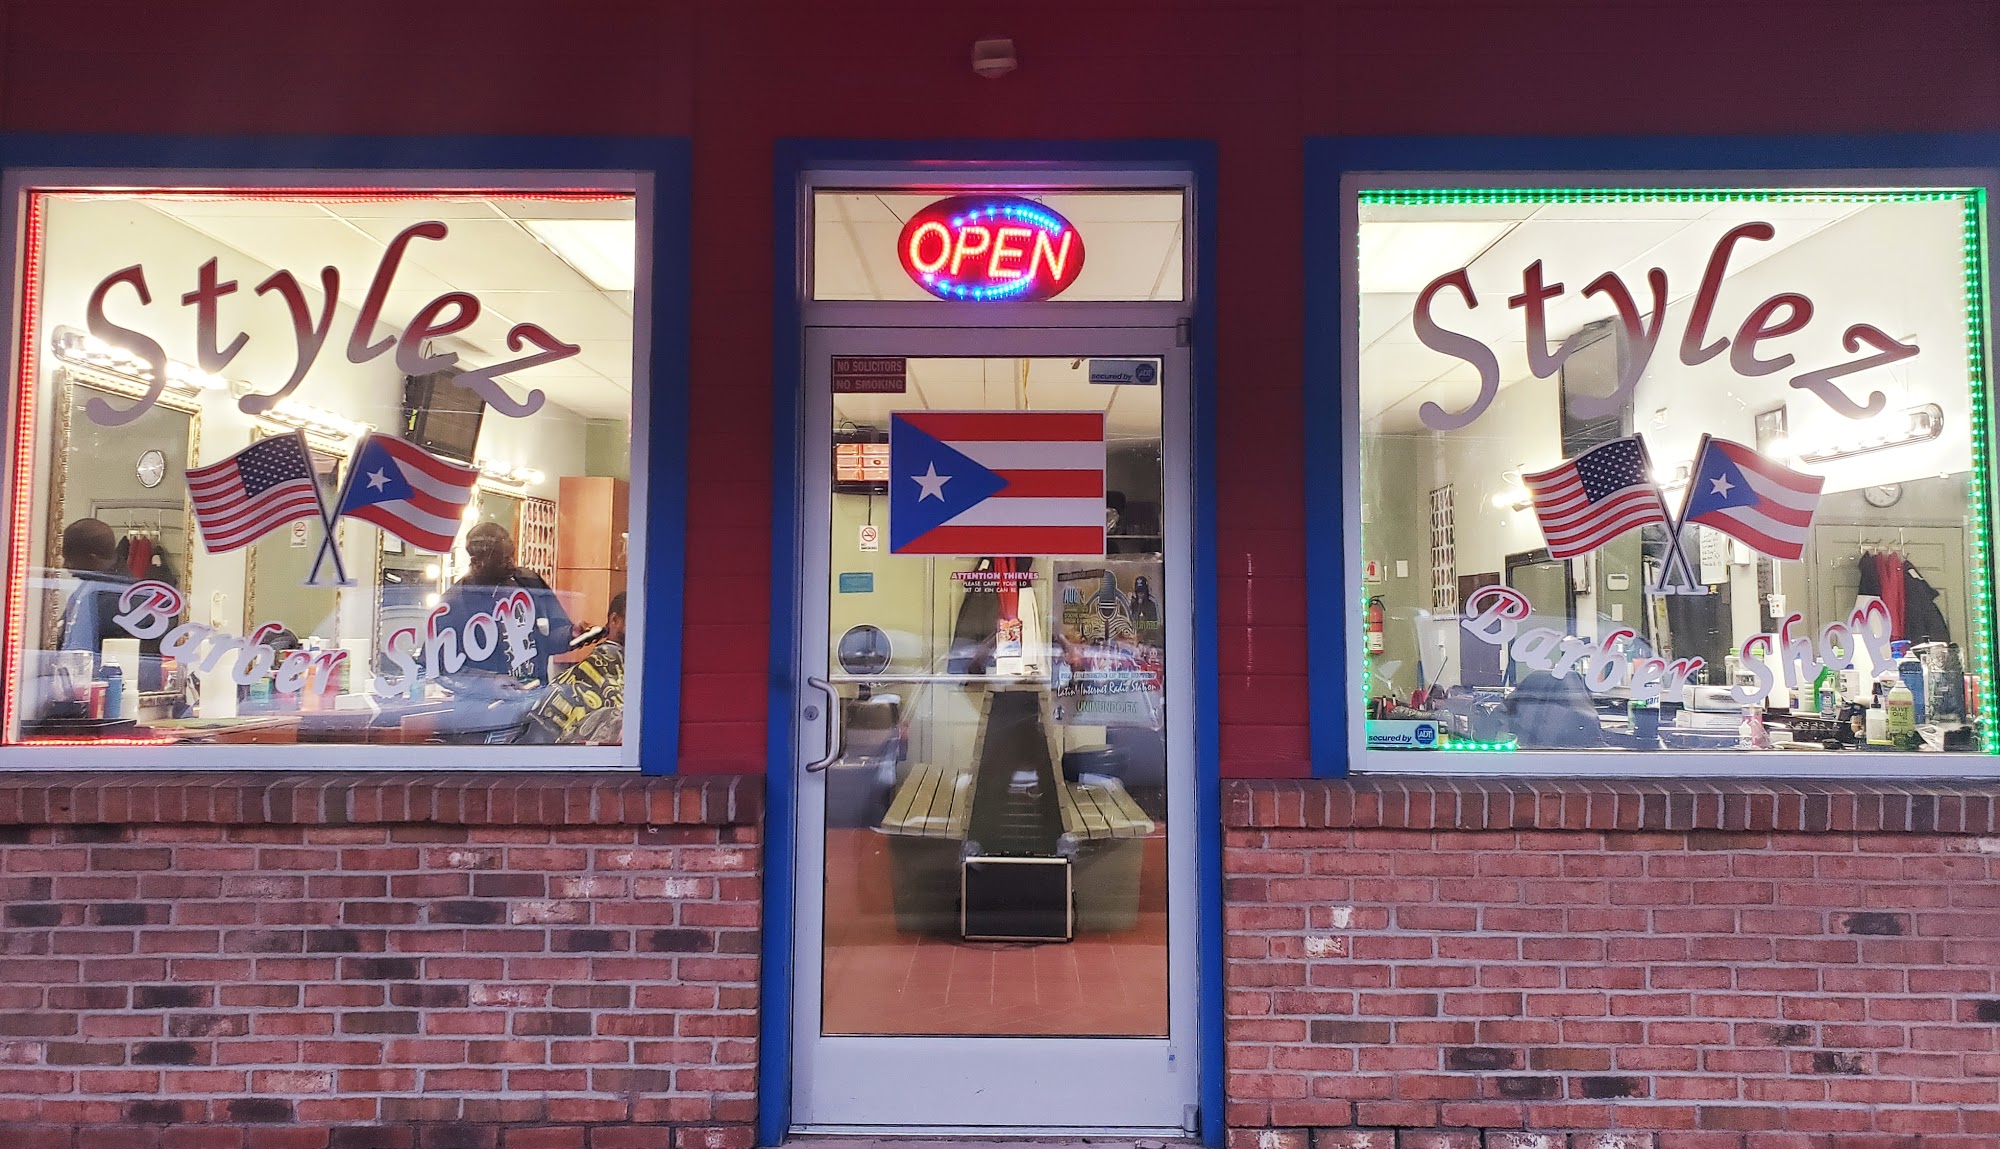 Stylez Barber Shop